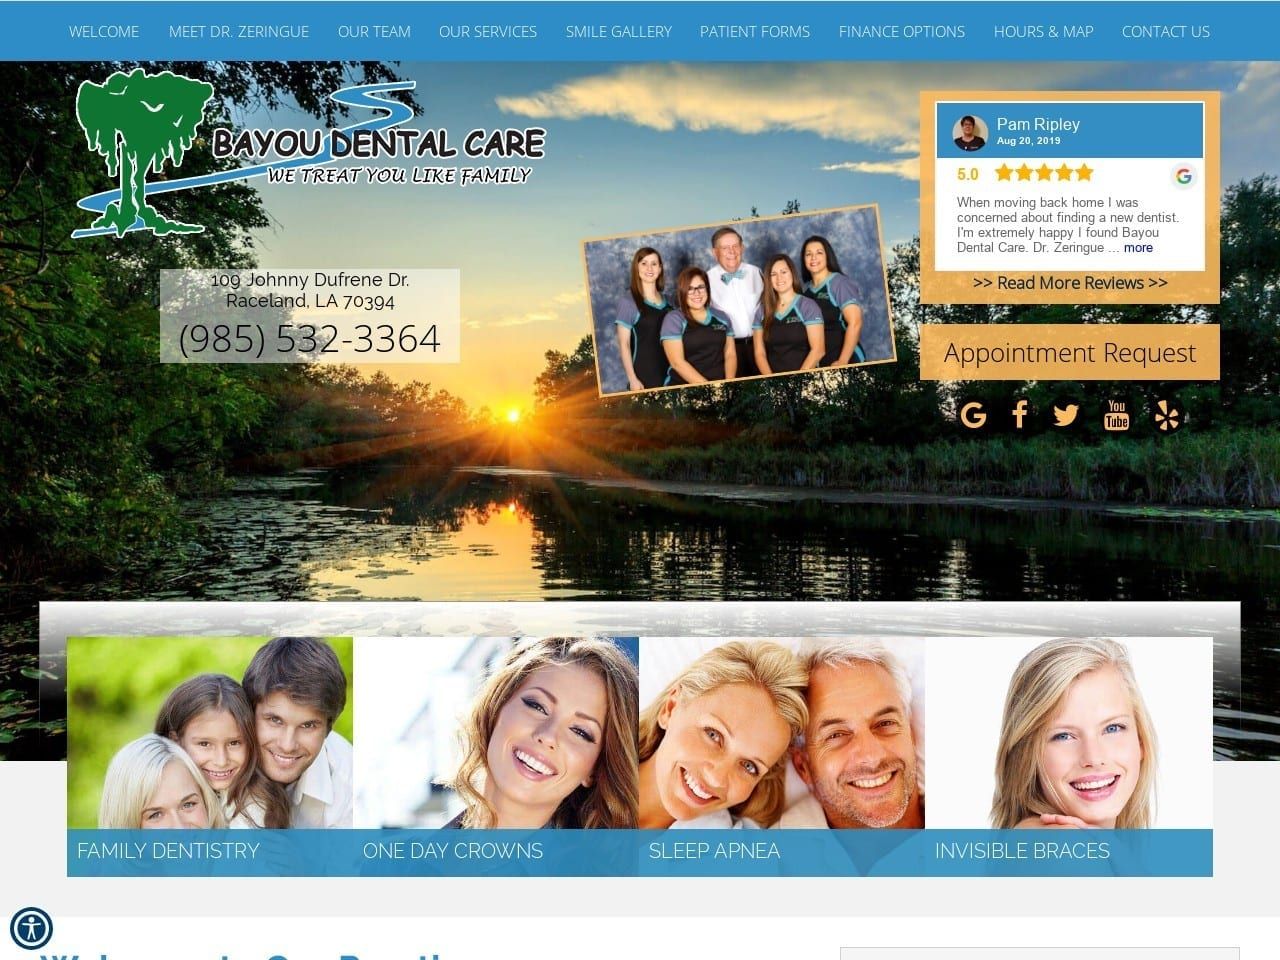 Bayou Dental Care Website Screenshot from bayoudentalcare.com